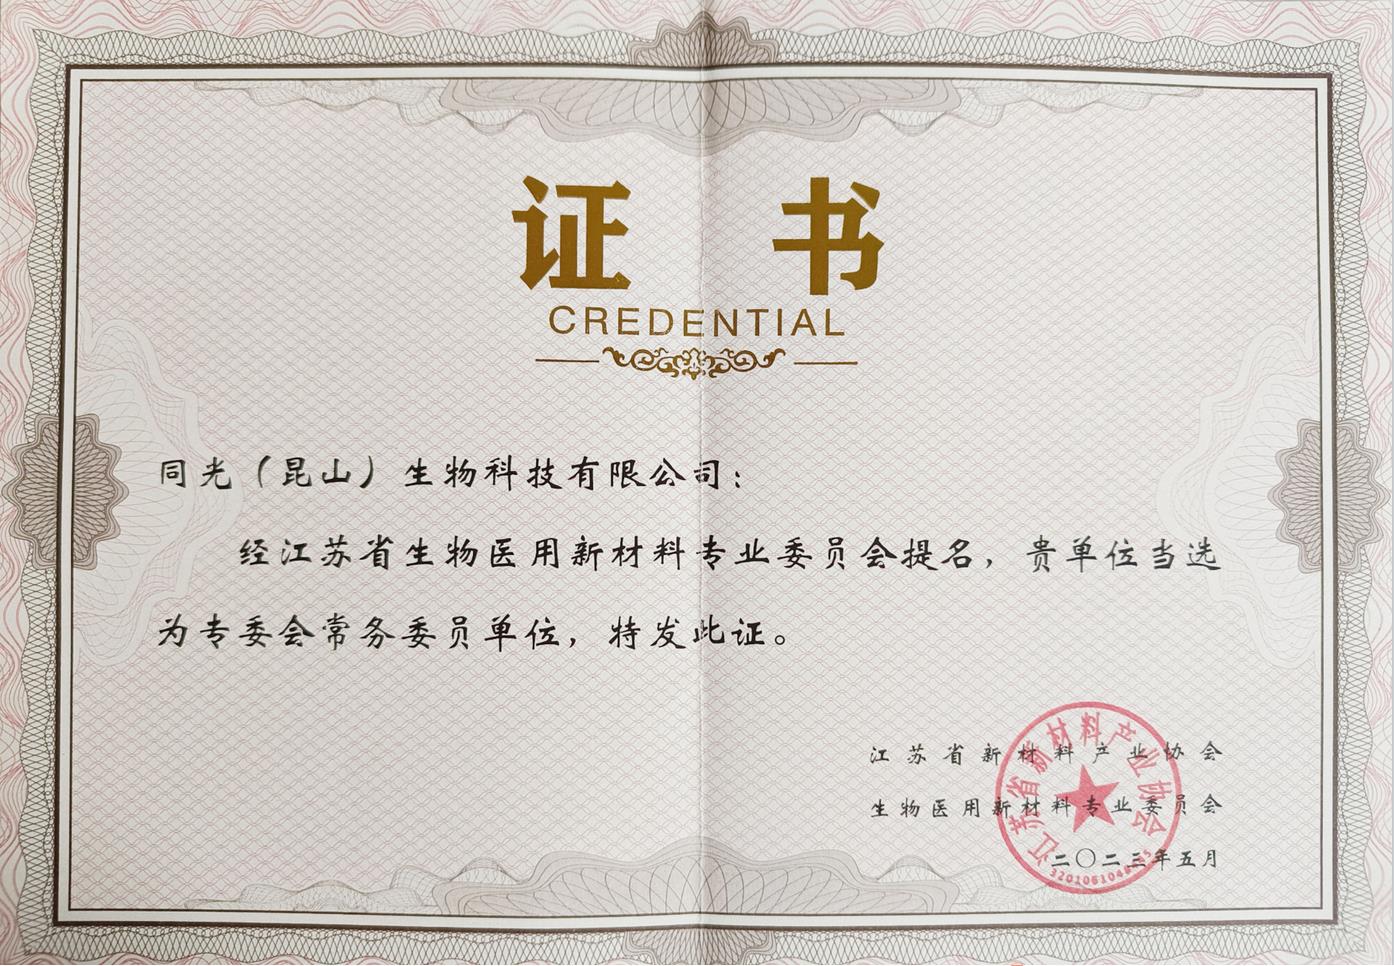 Elected as an executive member unit of the Jiangsu Provincial Biomedical New Materials Special Commi